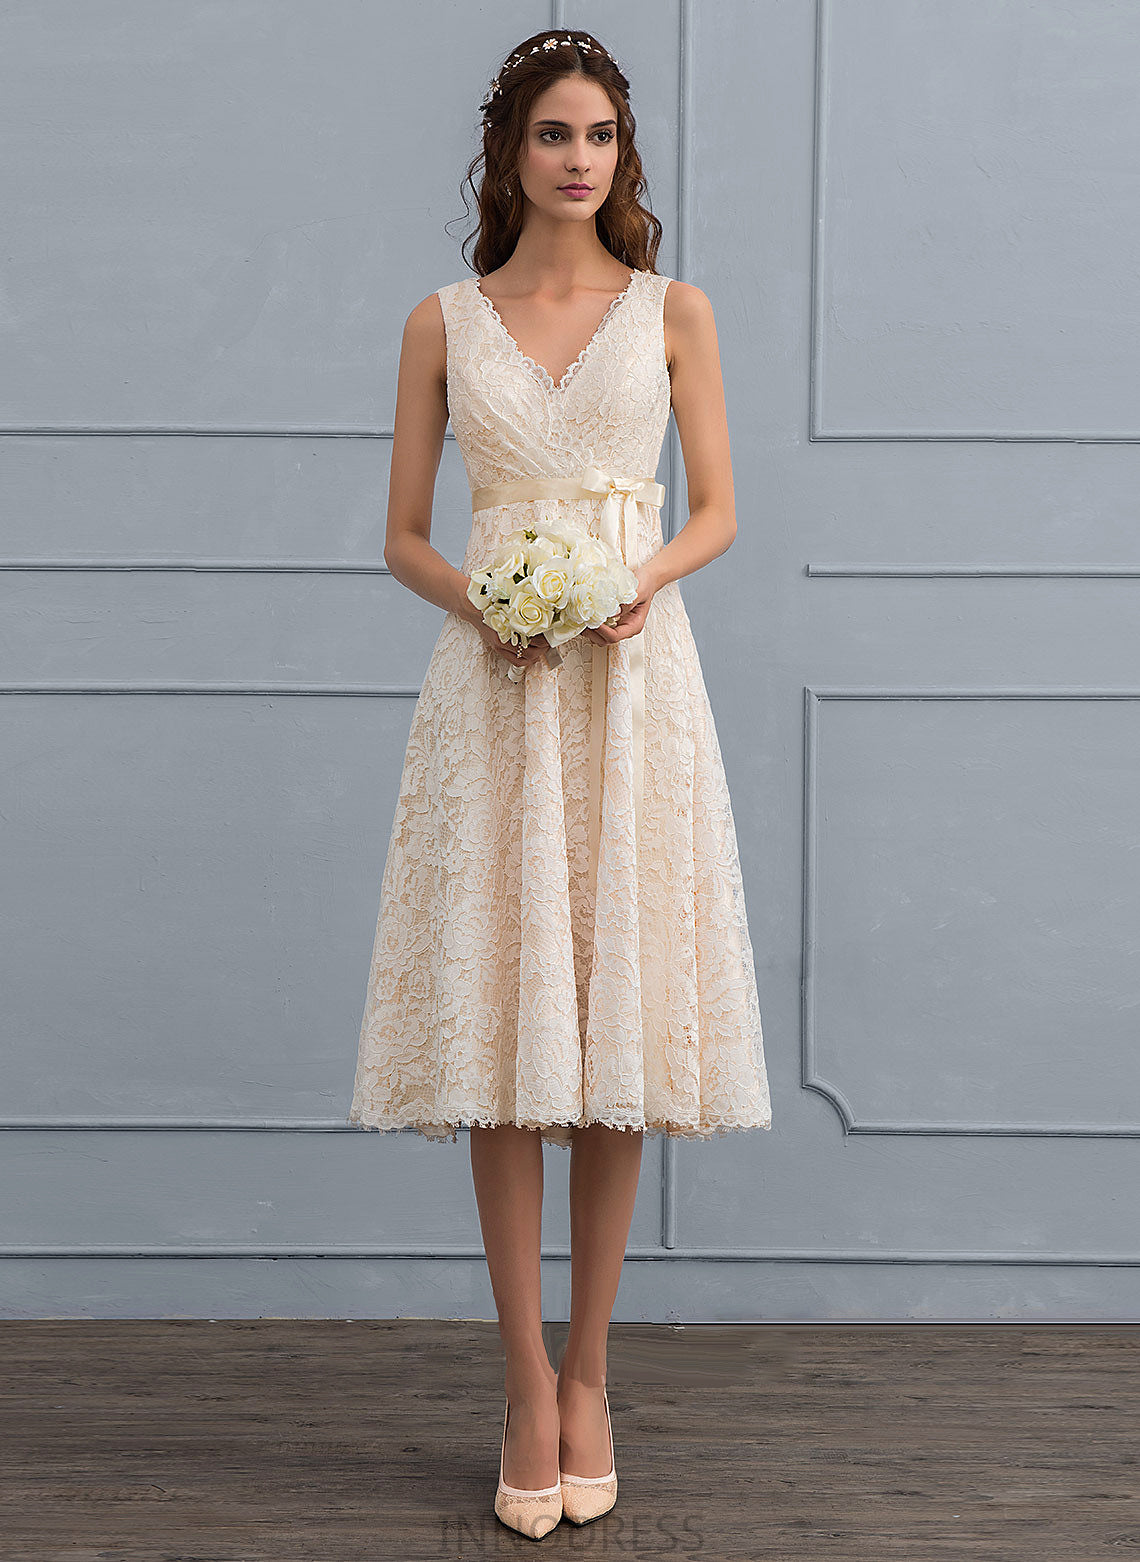 Dress Bow(s) Wedding Dresses With V-neck Wedding Knee-Length Lace A-Line Erika